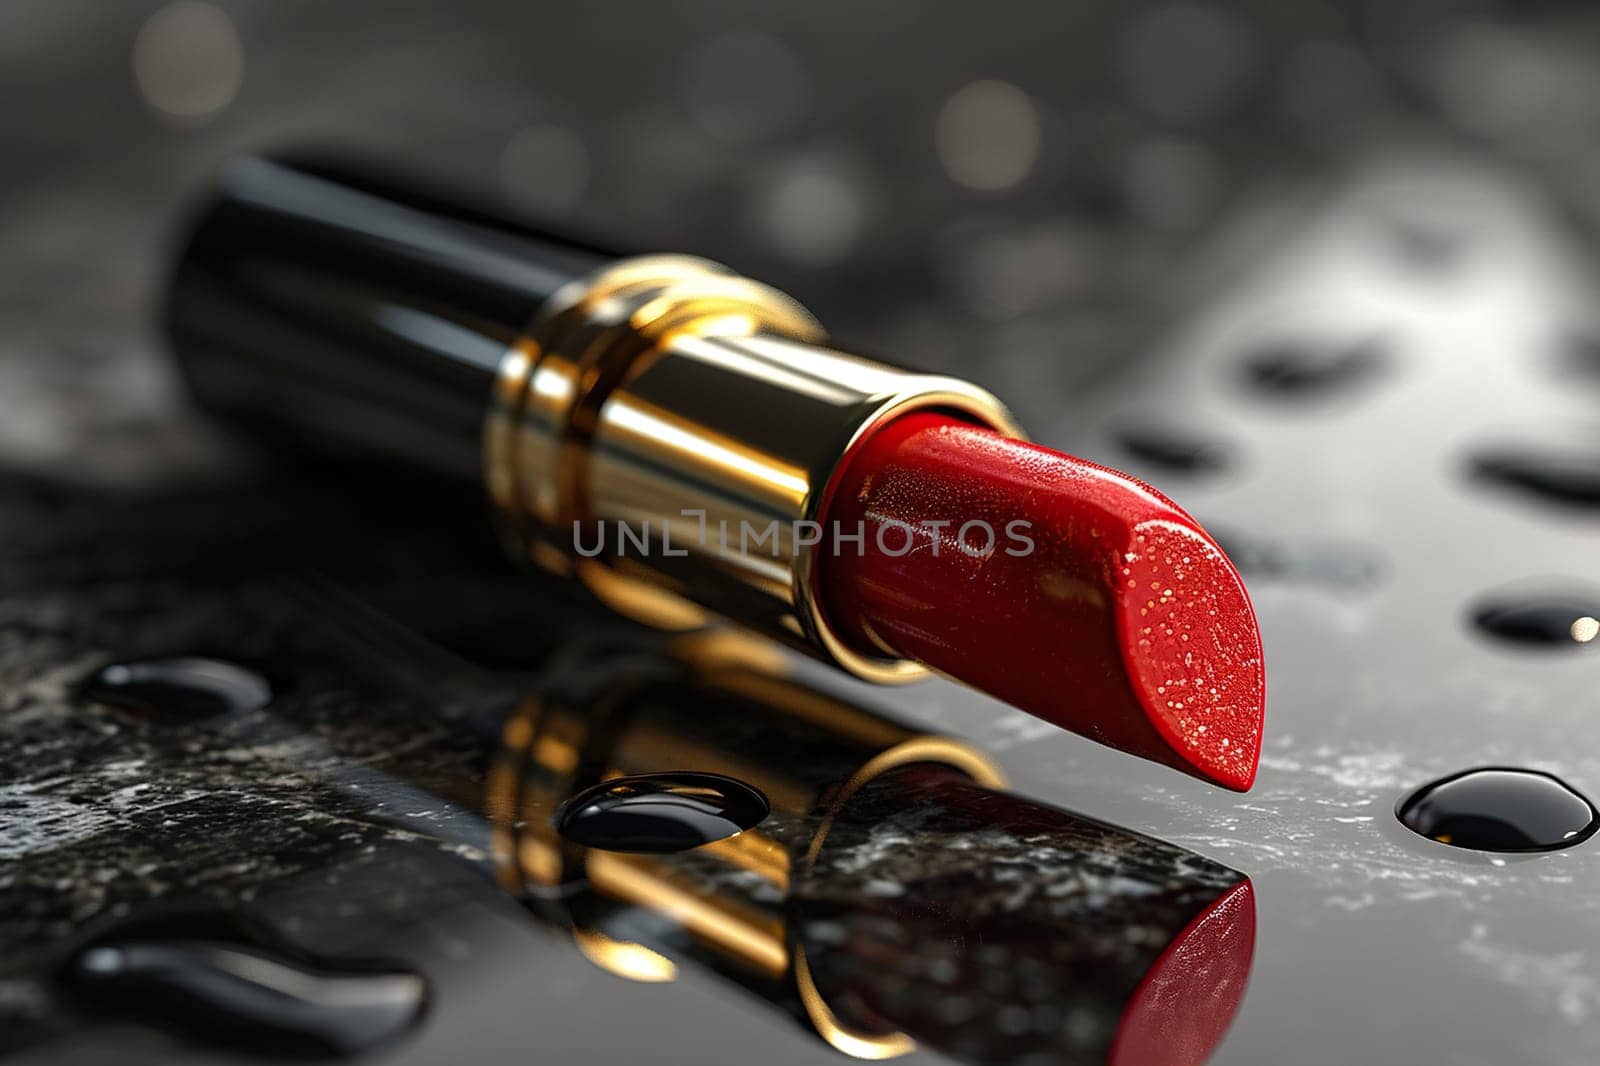 Open red lipstick lies on a wet surface close-up.